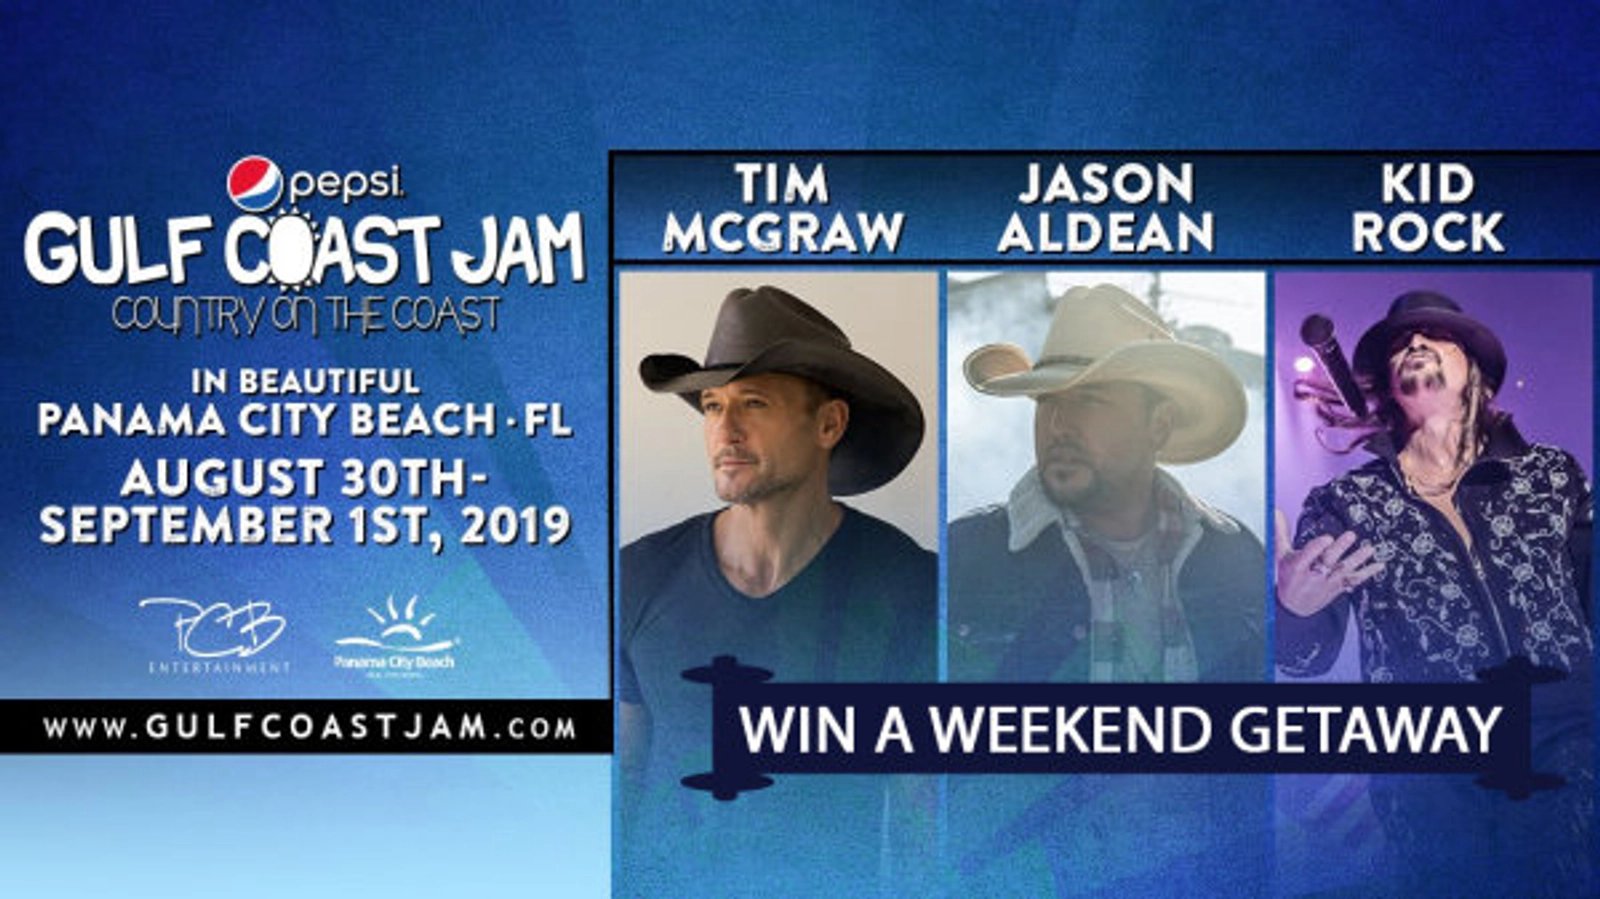 Pepsi Gulf Coast Jam Weekend Getaway - Thumbnail Image